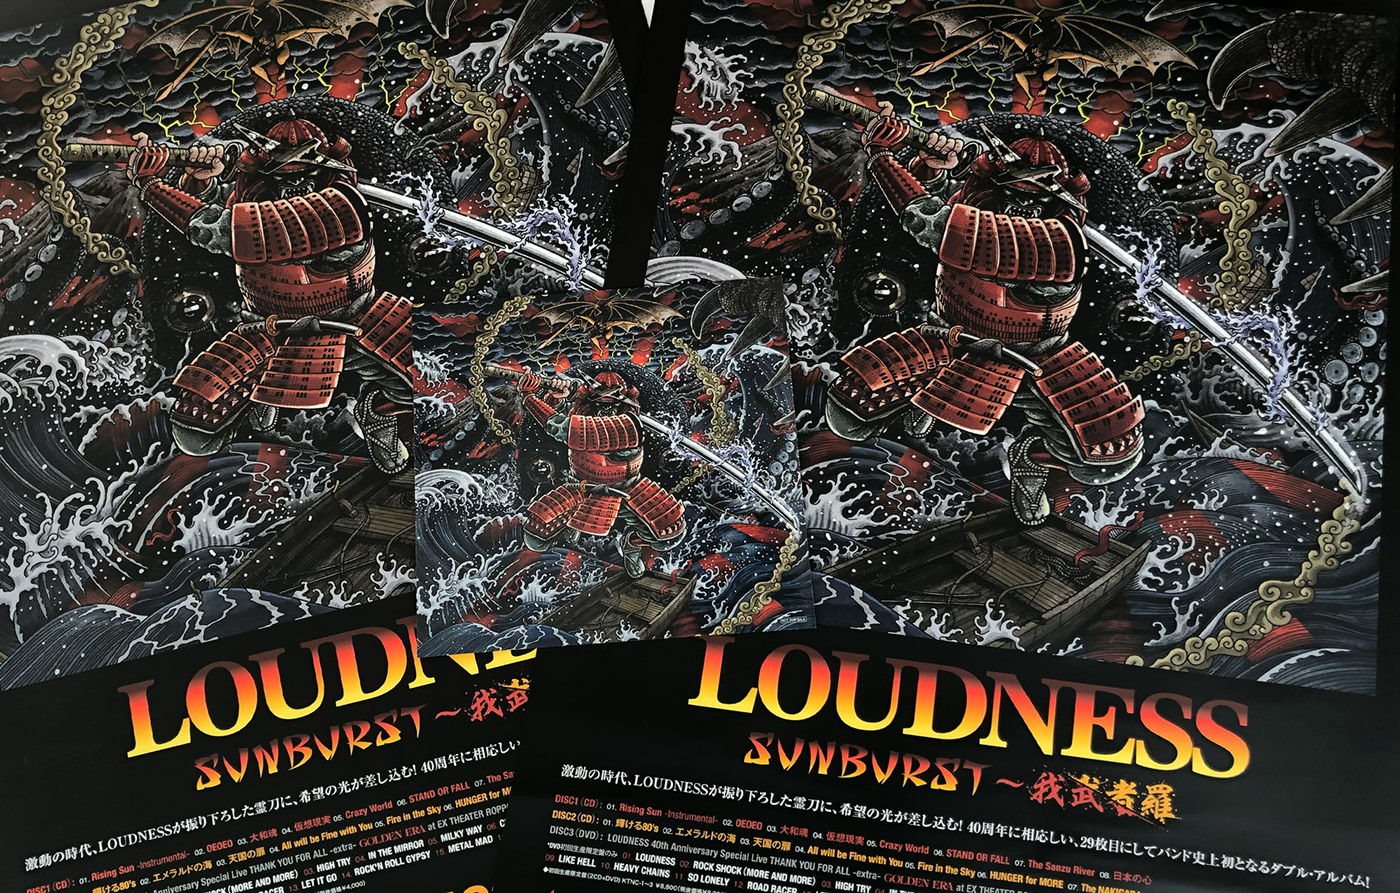 band japan katana Loudness metal music rock samurai art monster